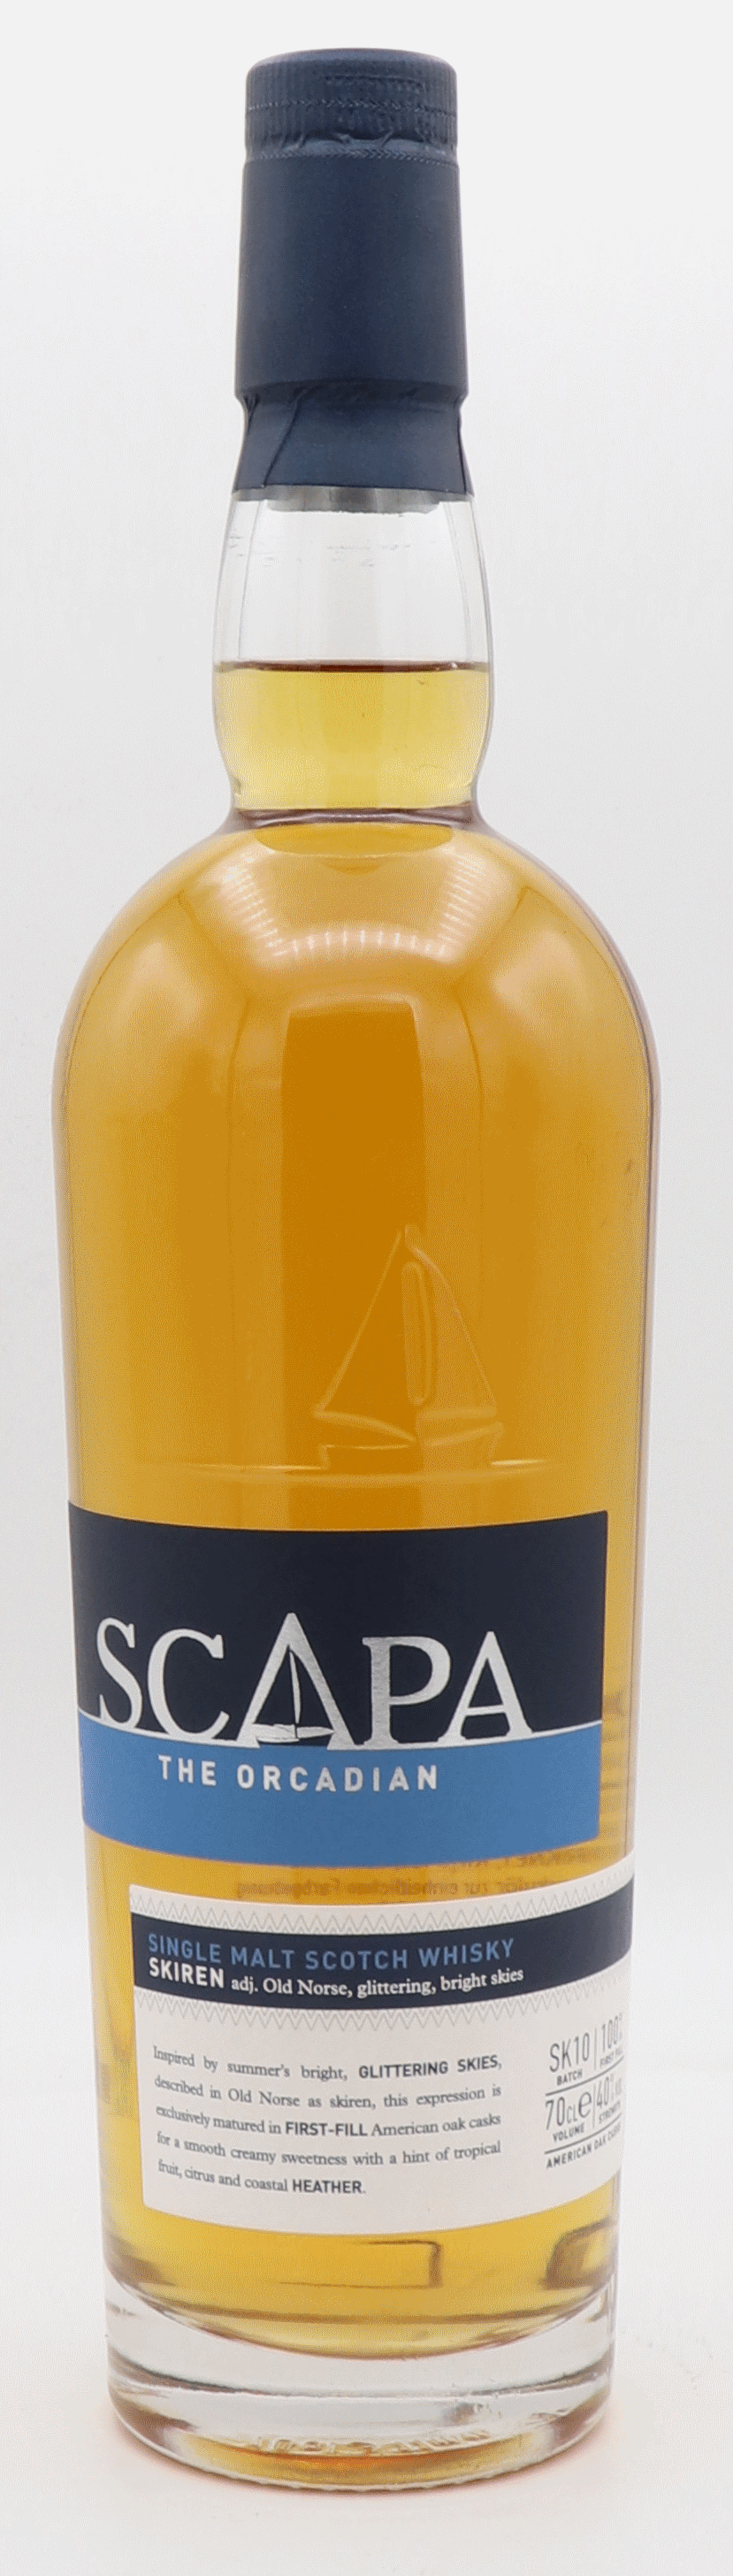 Scapa - The Oracdian